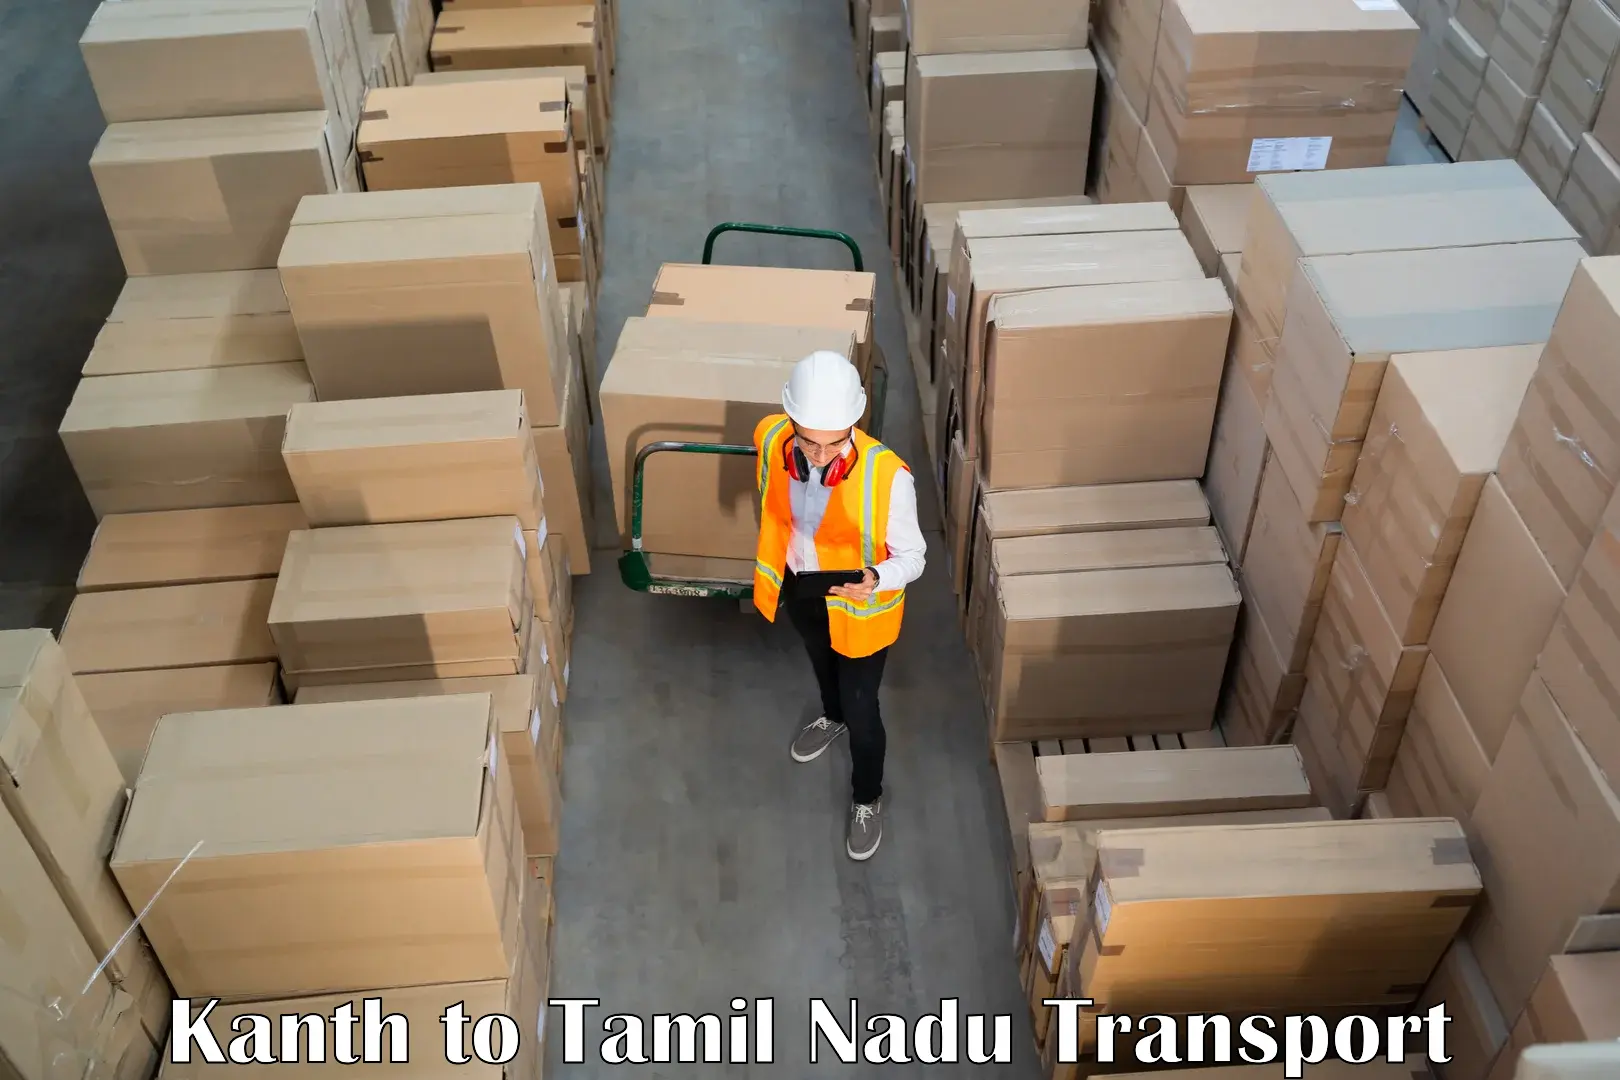 Transport shared services Kanth to Thiruvadanai